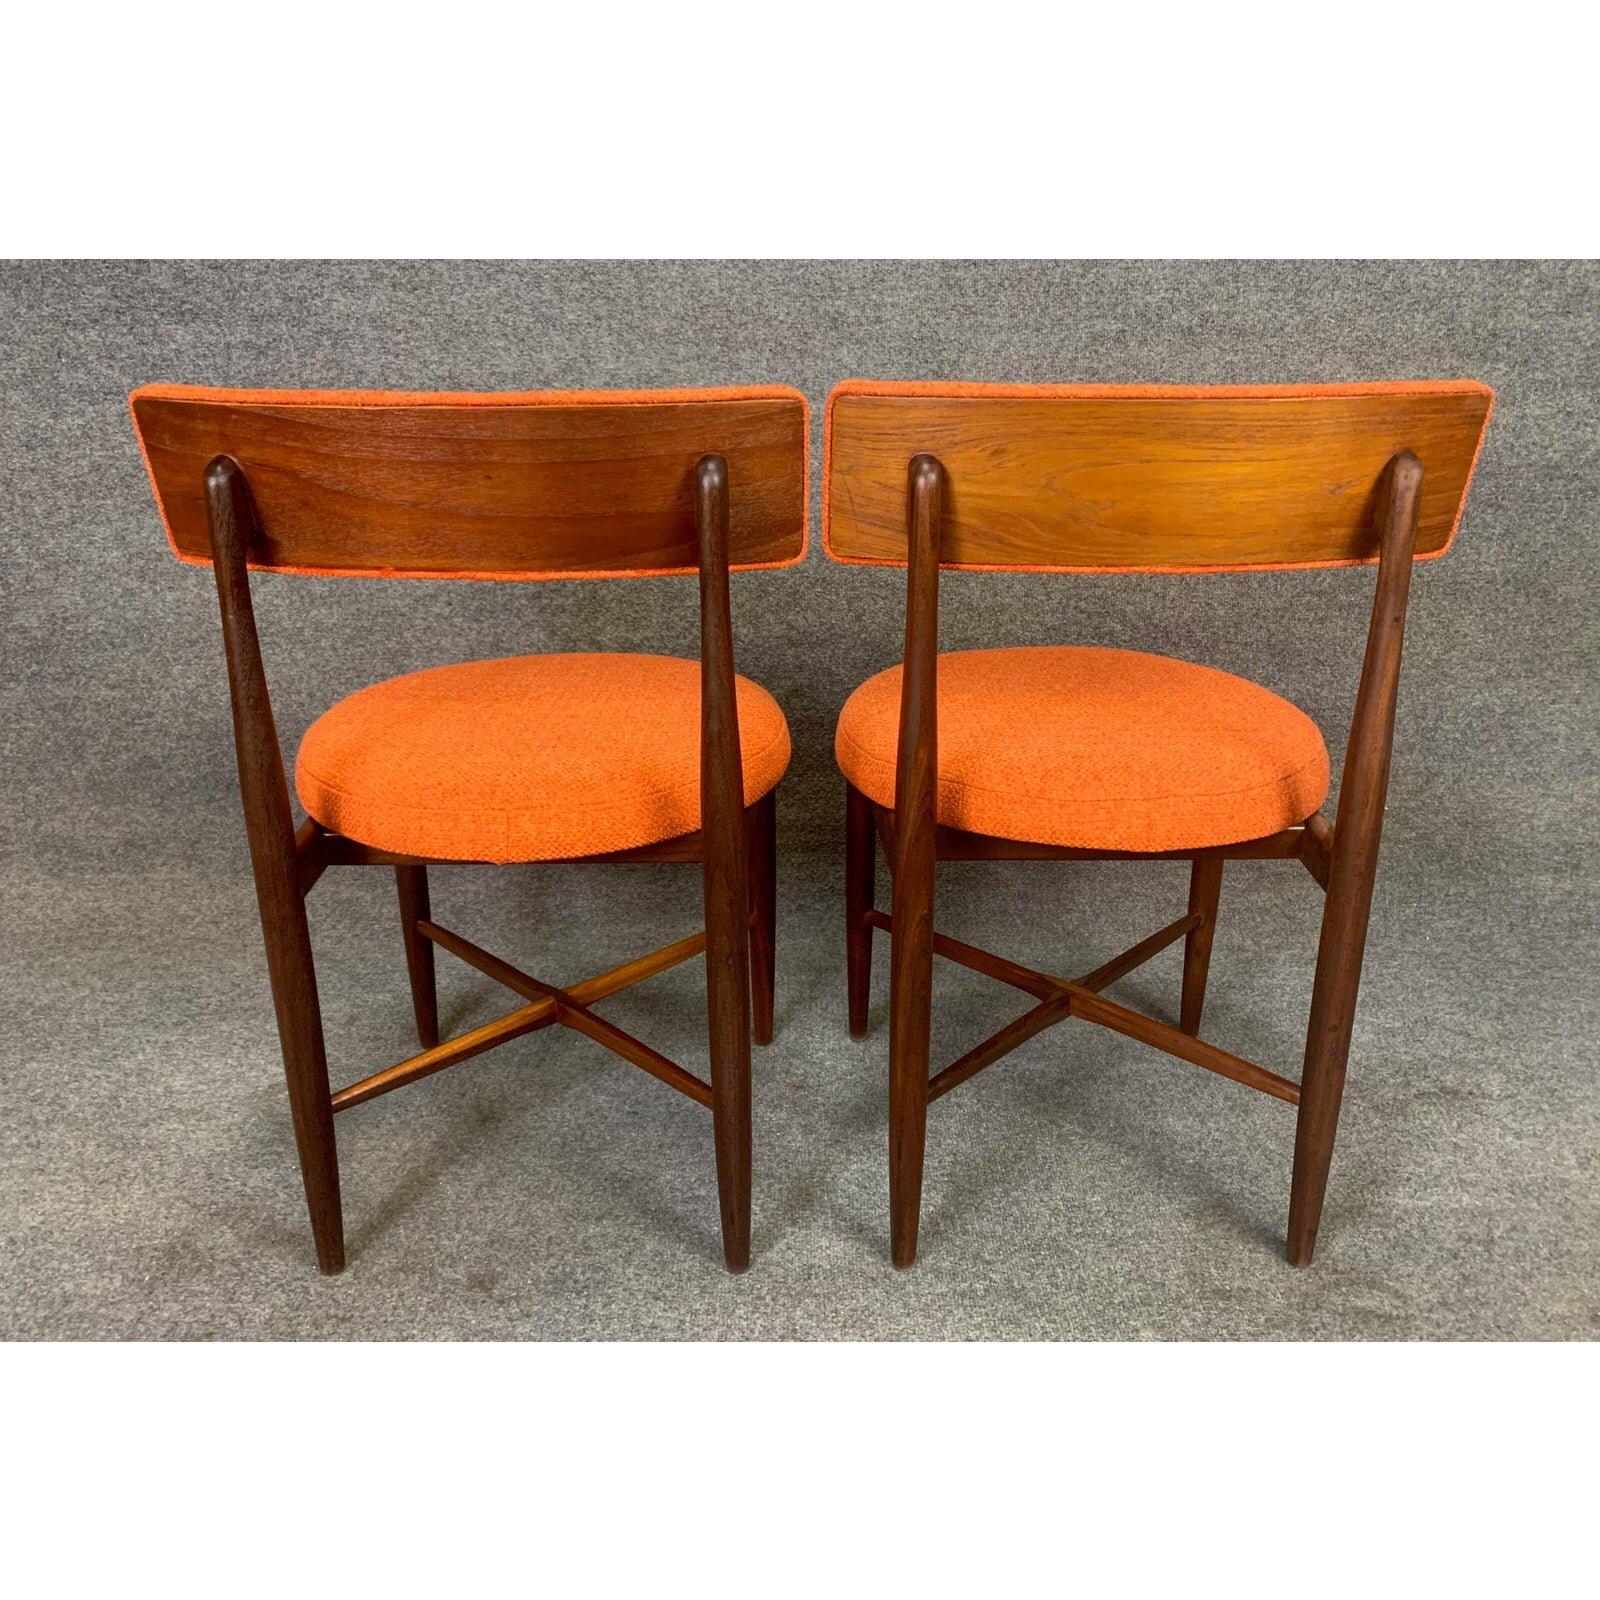 English Pair of Vintage British Mid Century Modern Teak Accent Chairs by G Plan